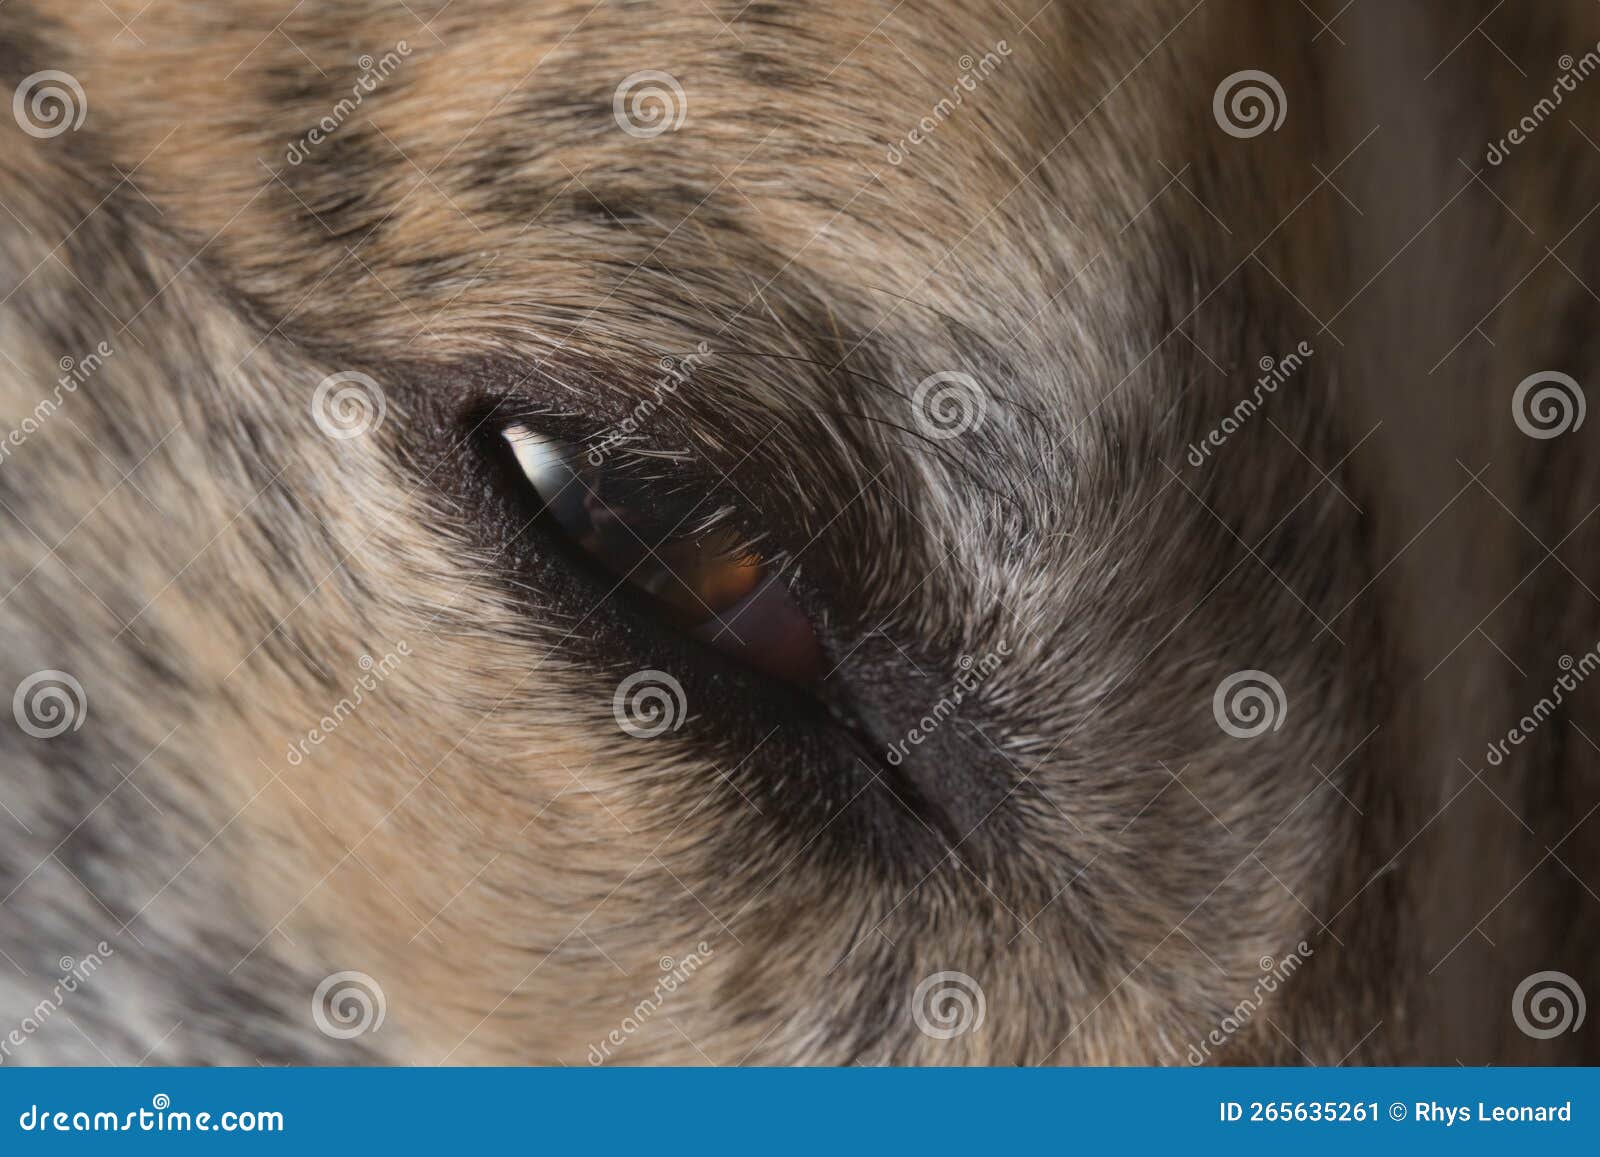 eyelashes, fur and dander shown in great detail, super macro pet image